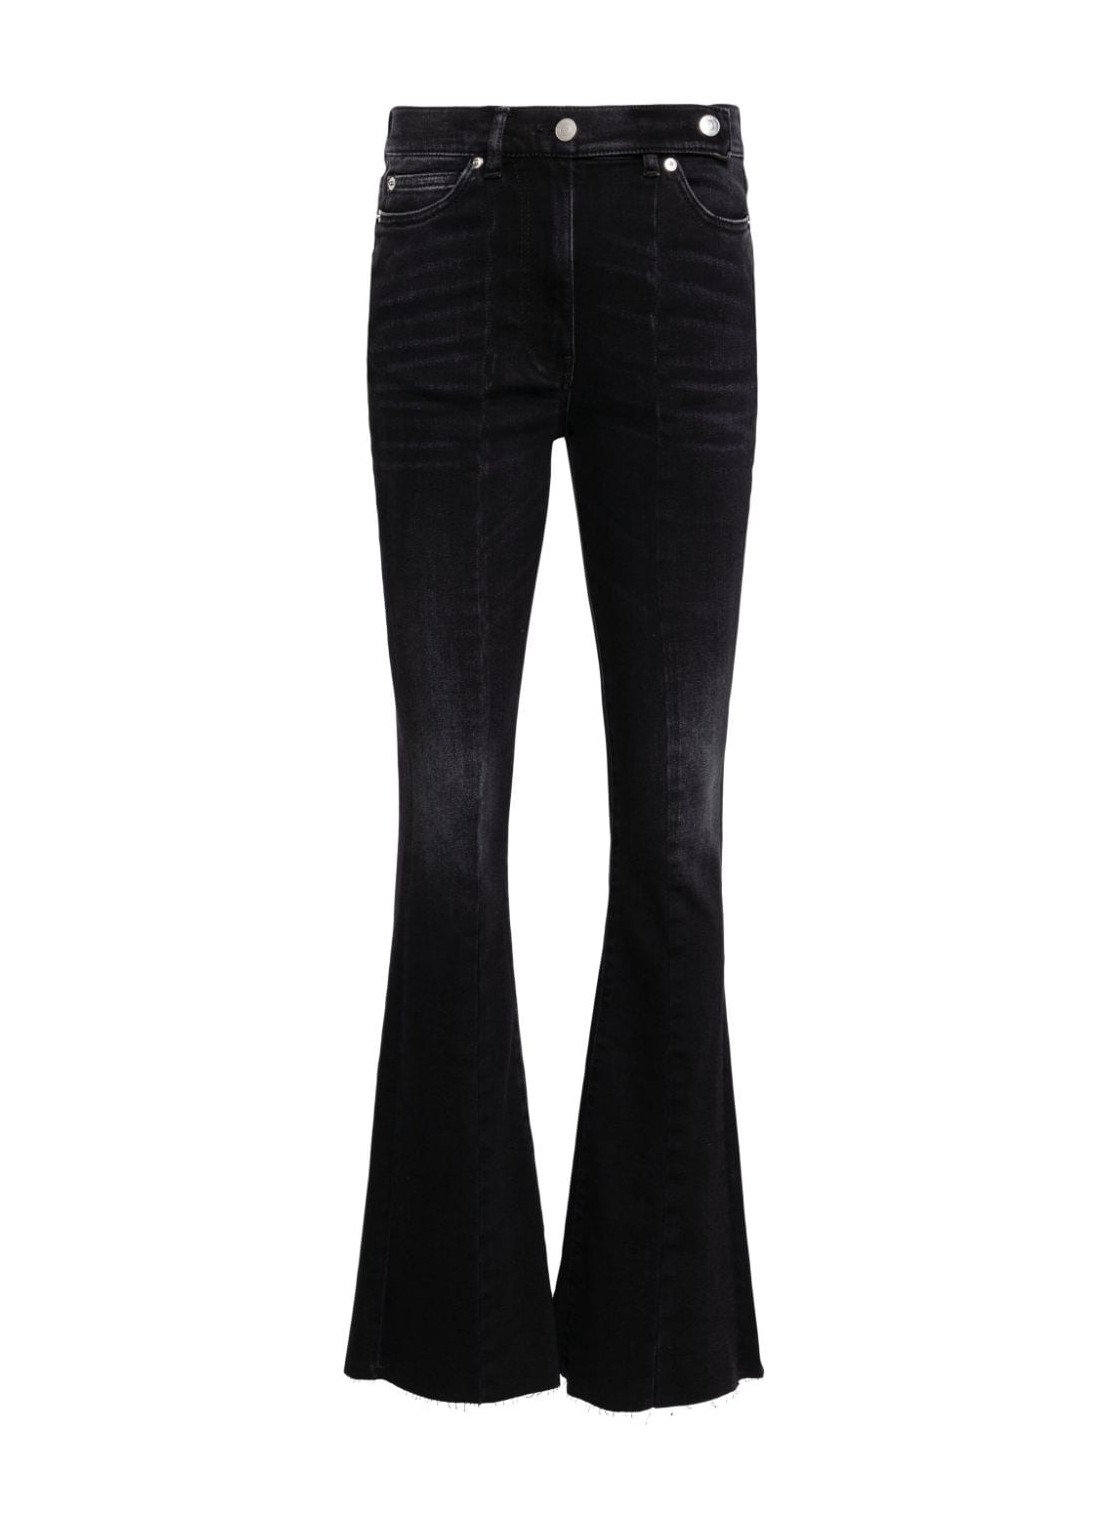 Pantalon jeans iro denim woman zacca wp23zacca blv24 talla negro
 